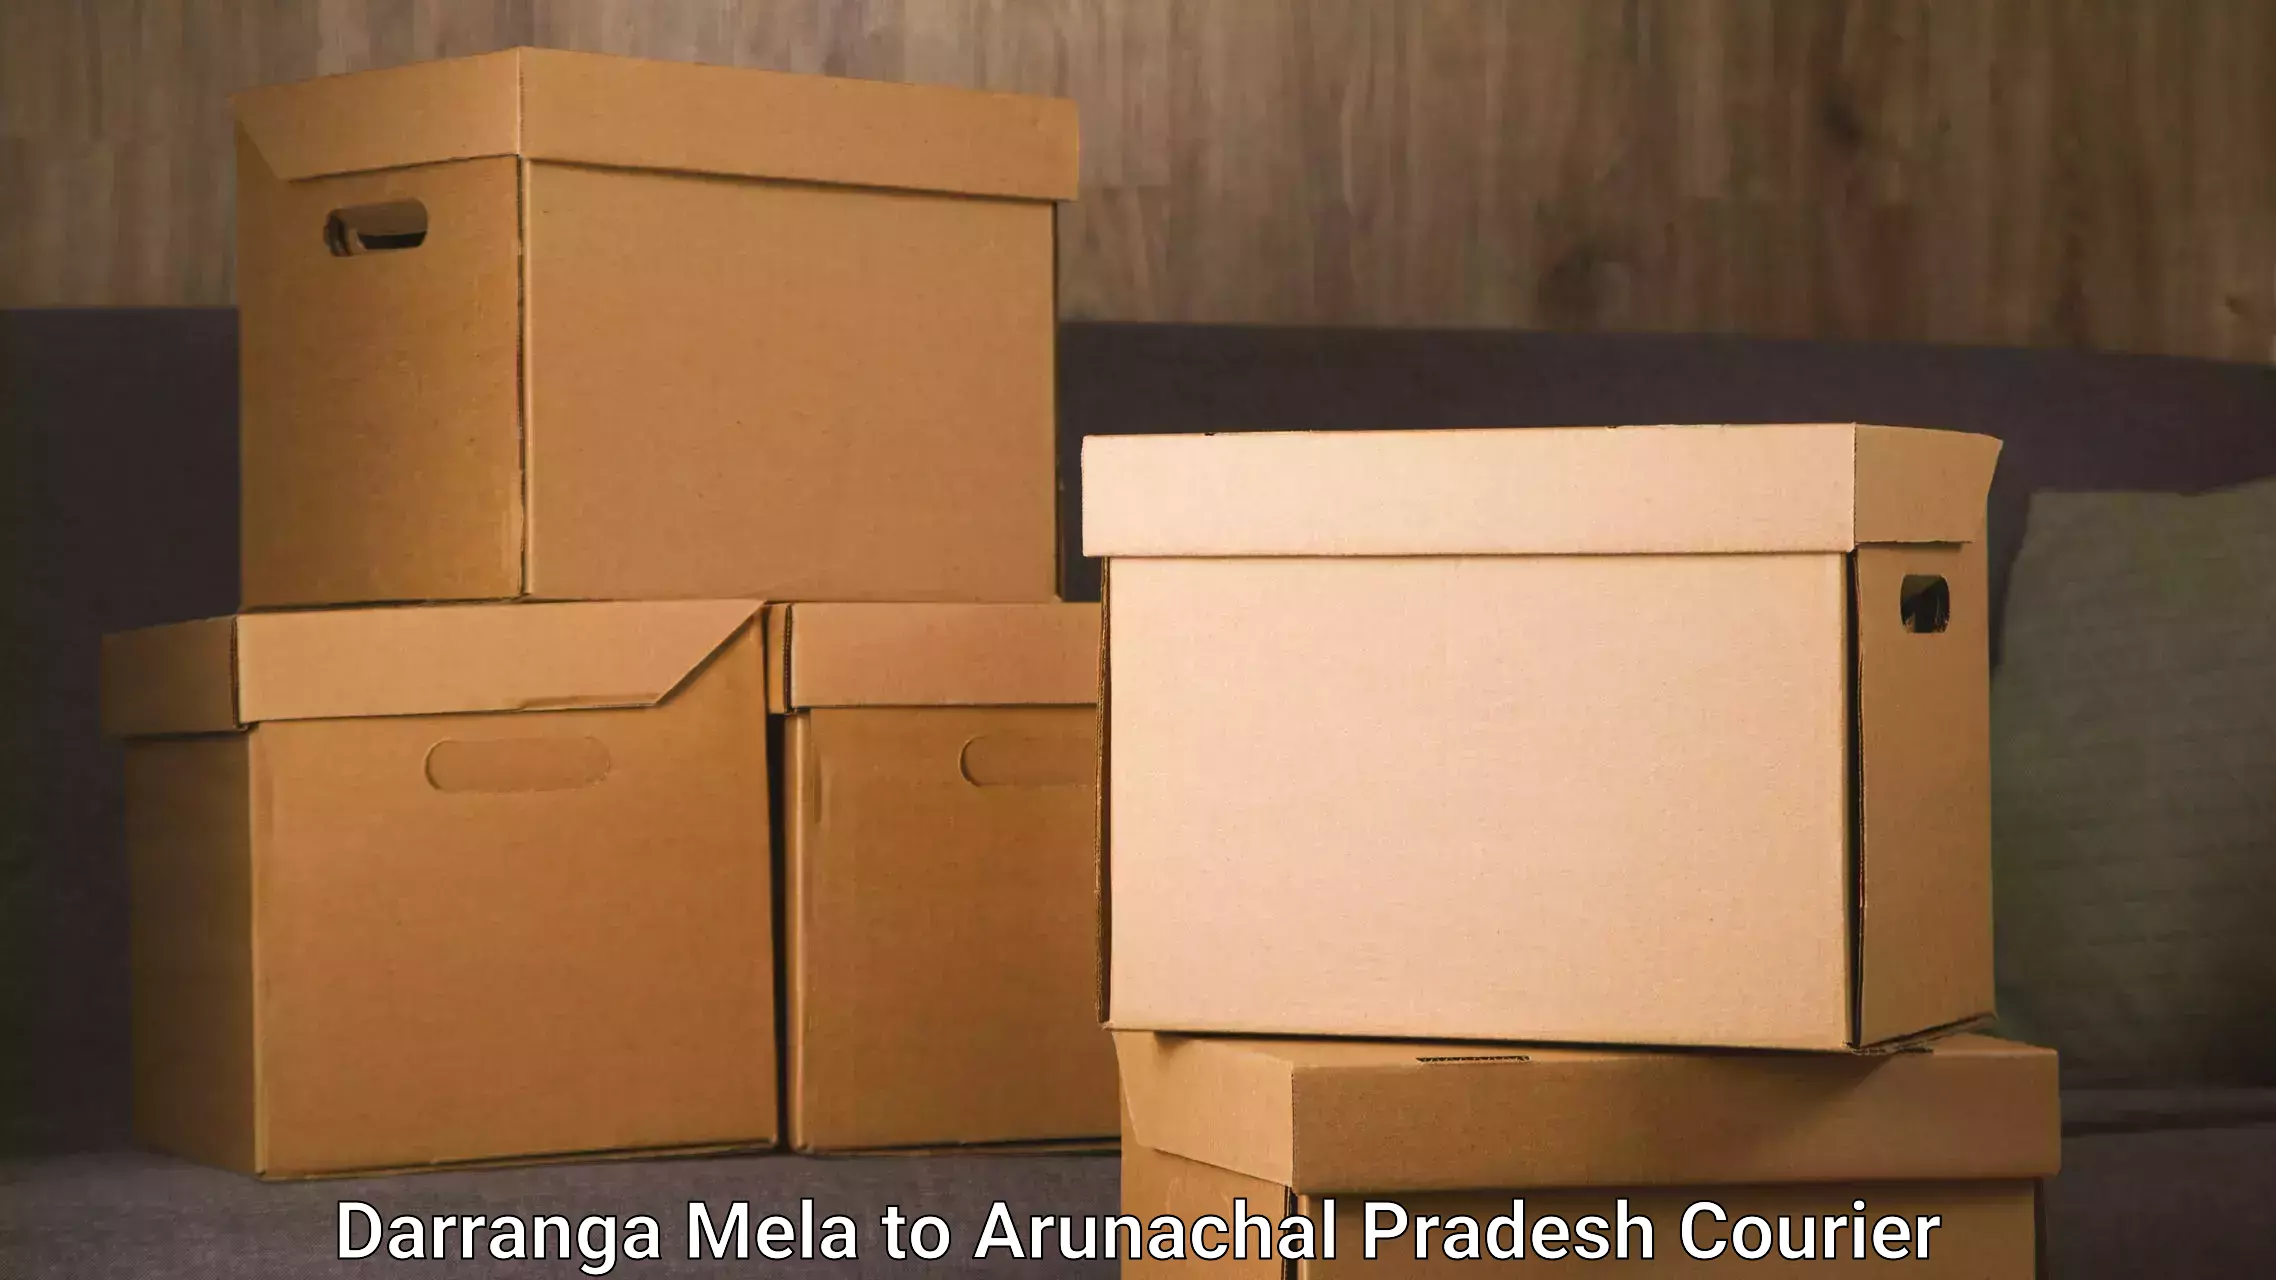 Enhanced delivery experience in Darranga Mela to Namsai